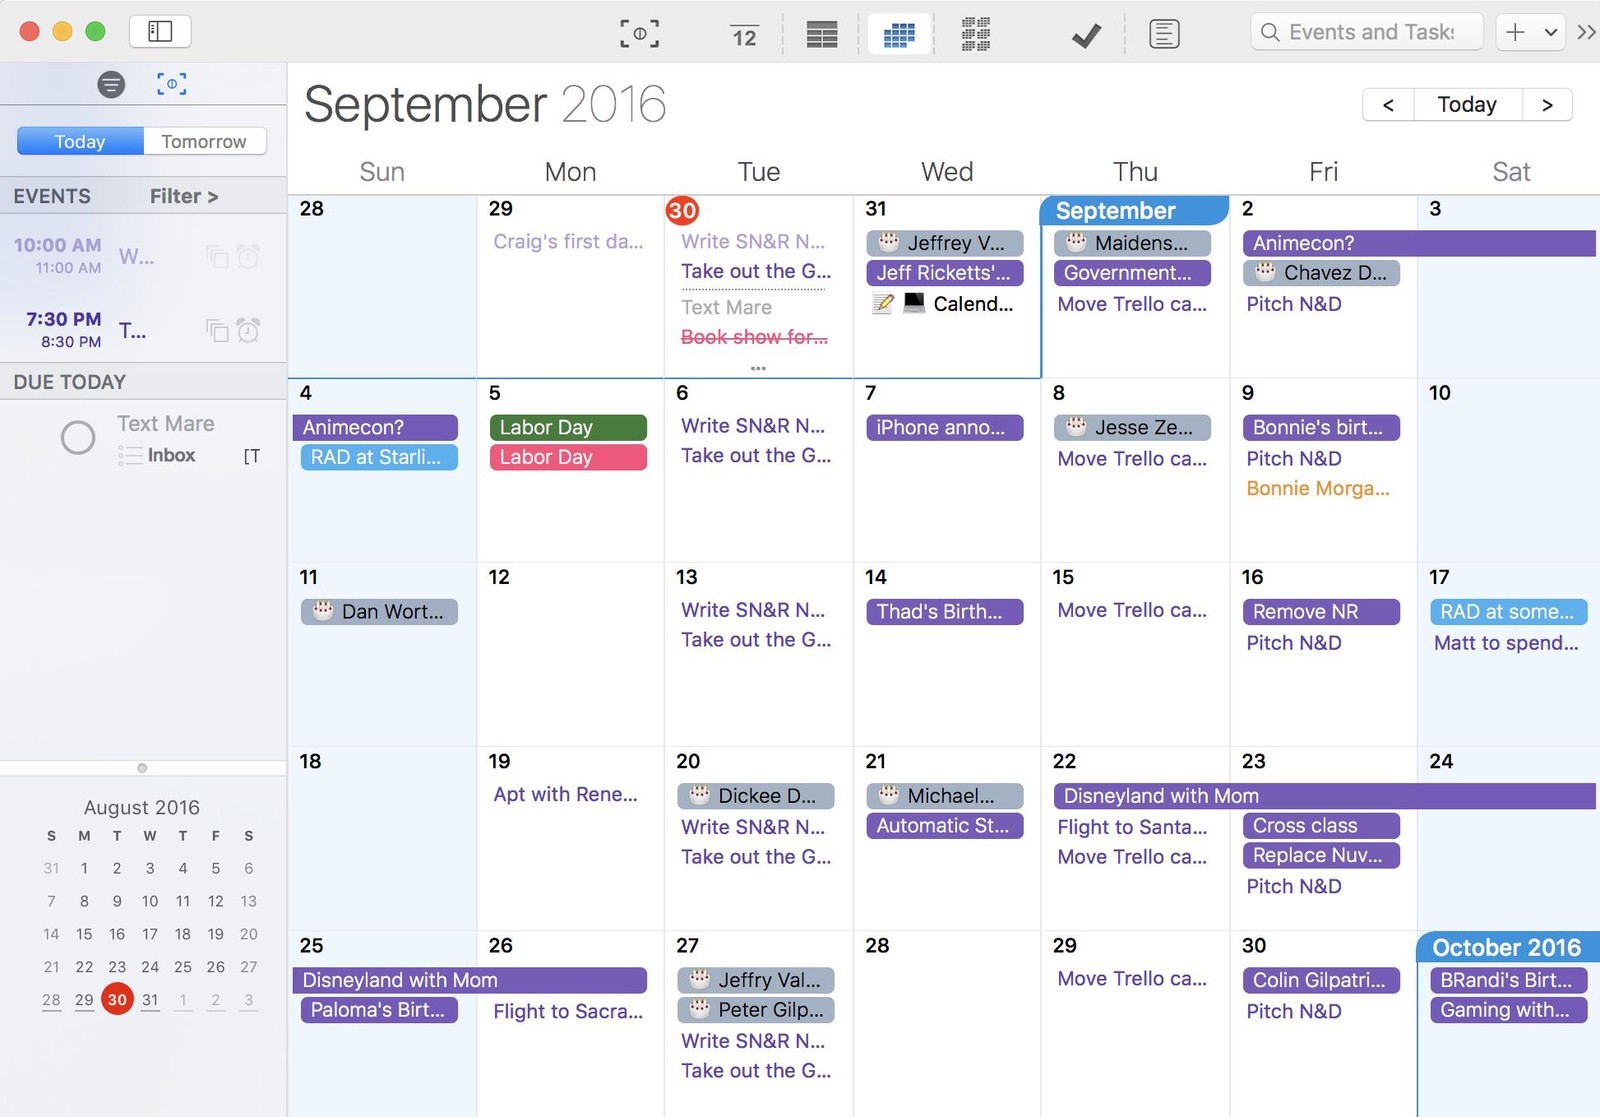 desktop calendar for windows and mac